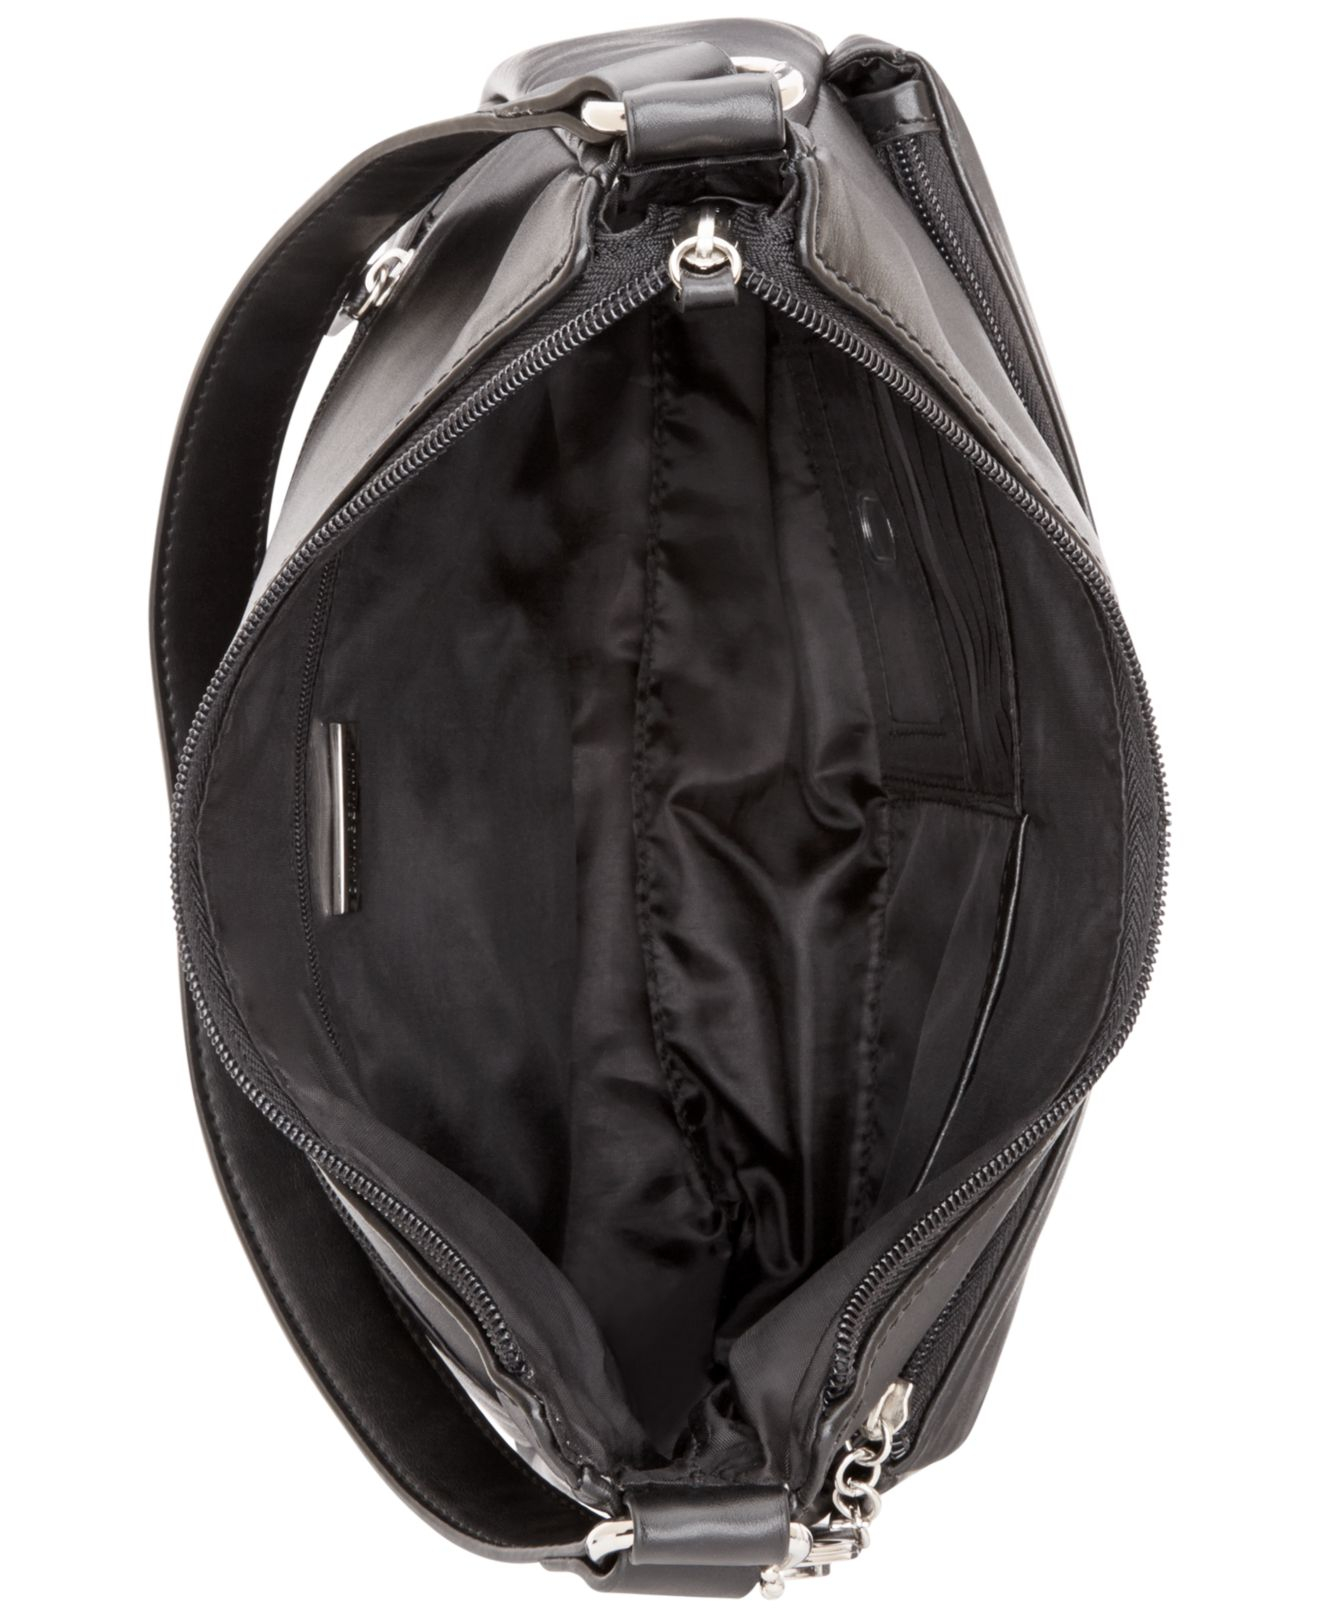 Giani bernini Nappa Leather Hobo Bag in Black | Lyst